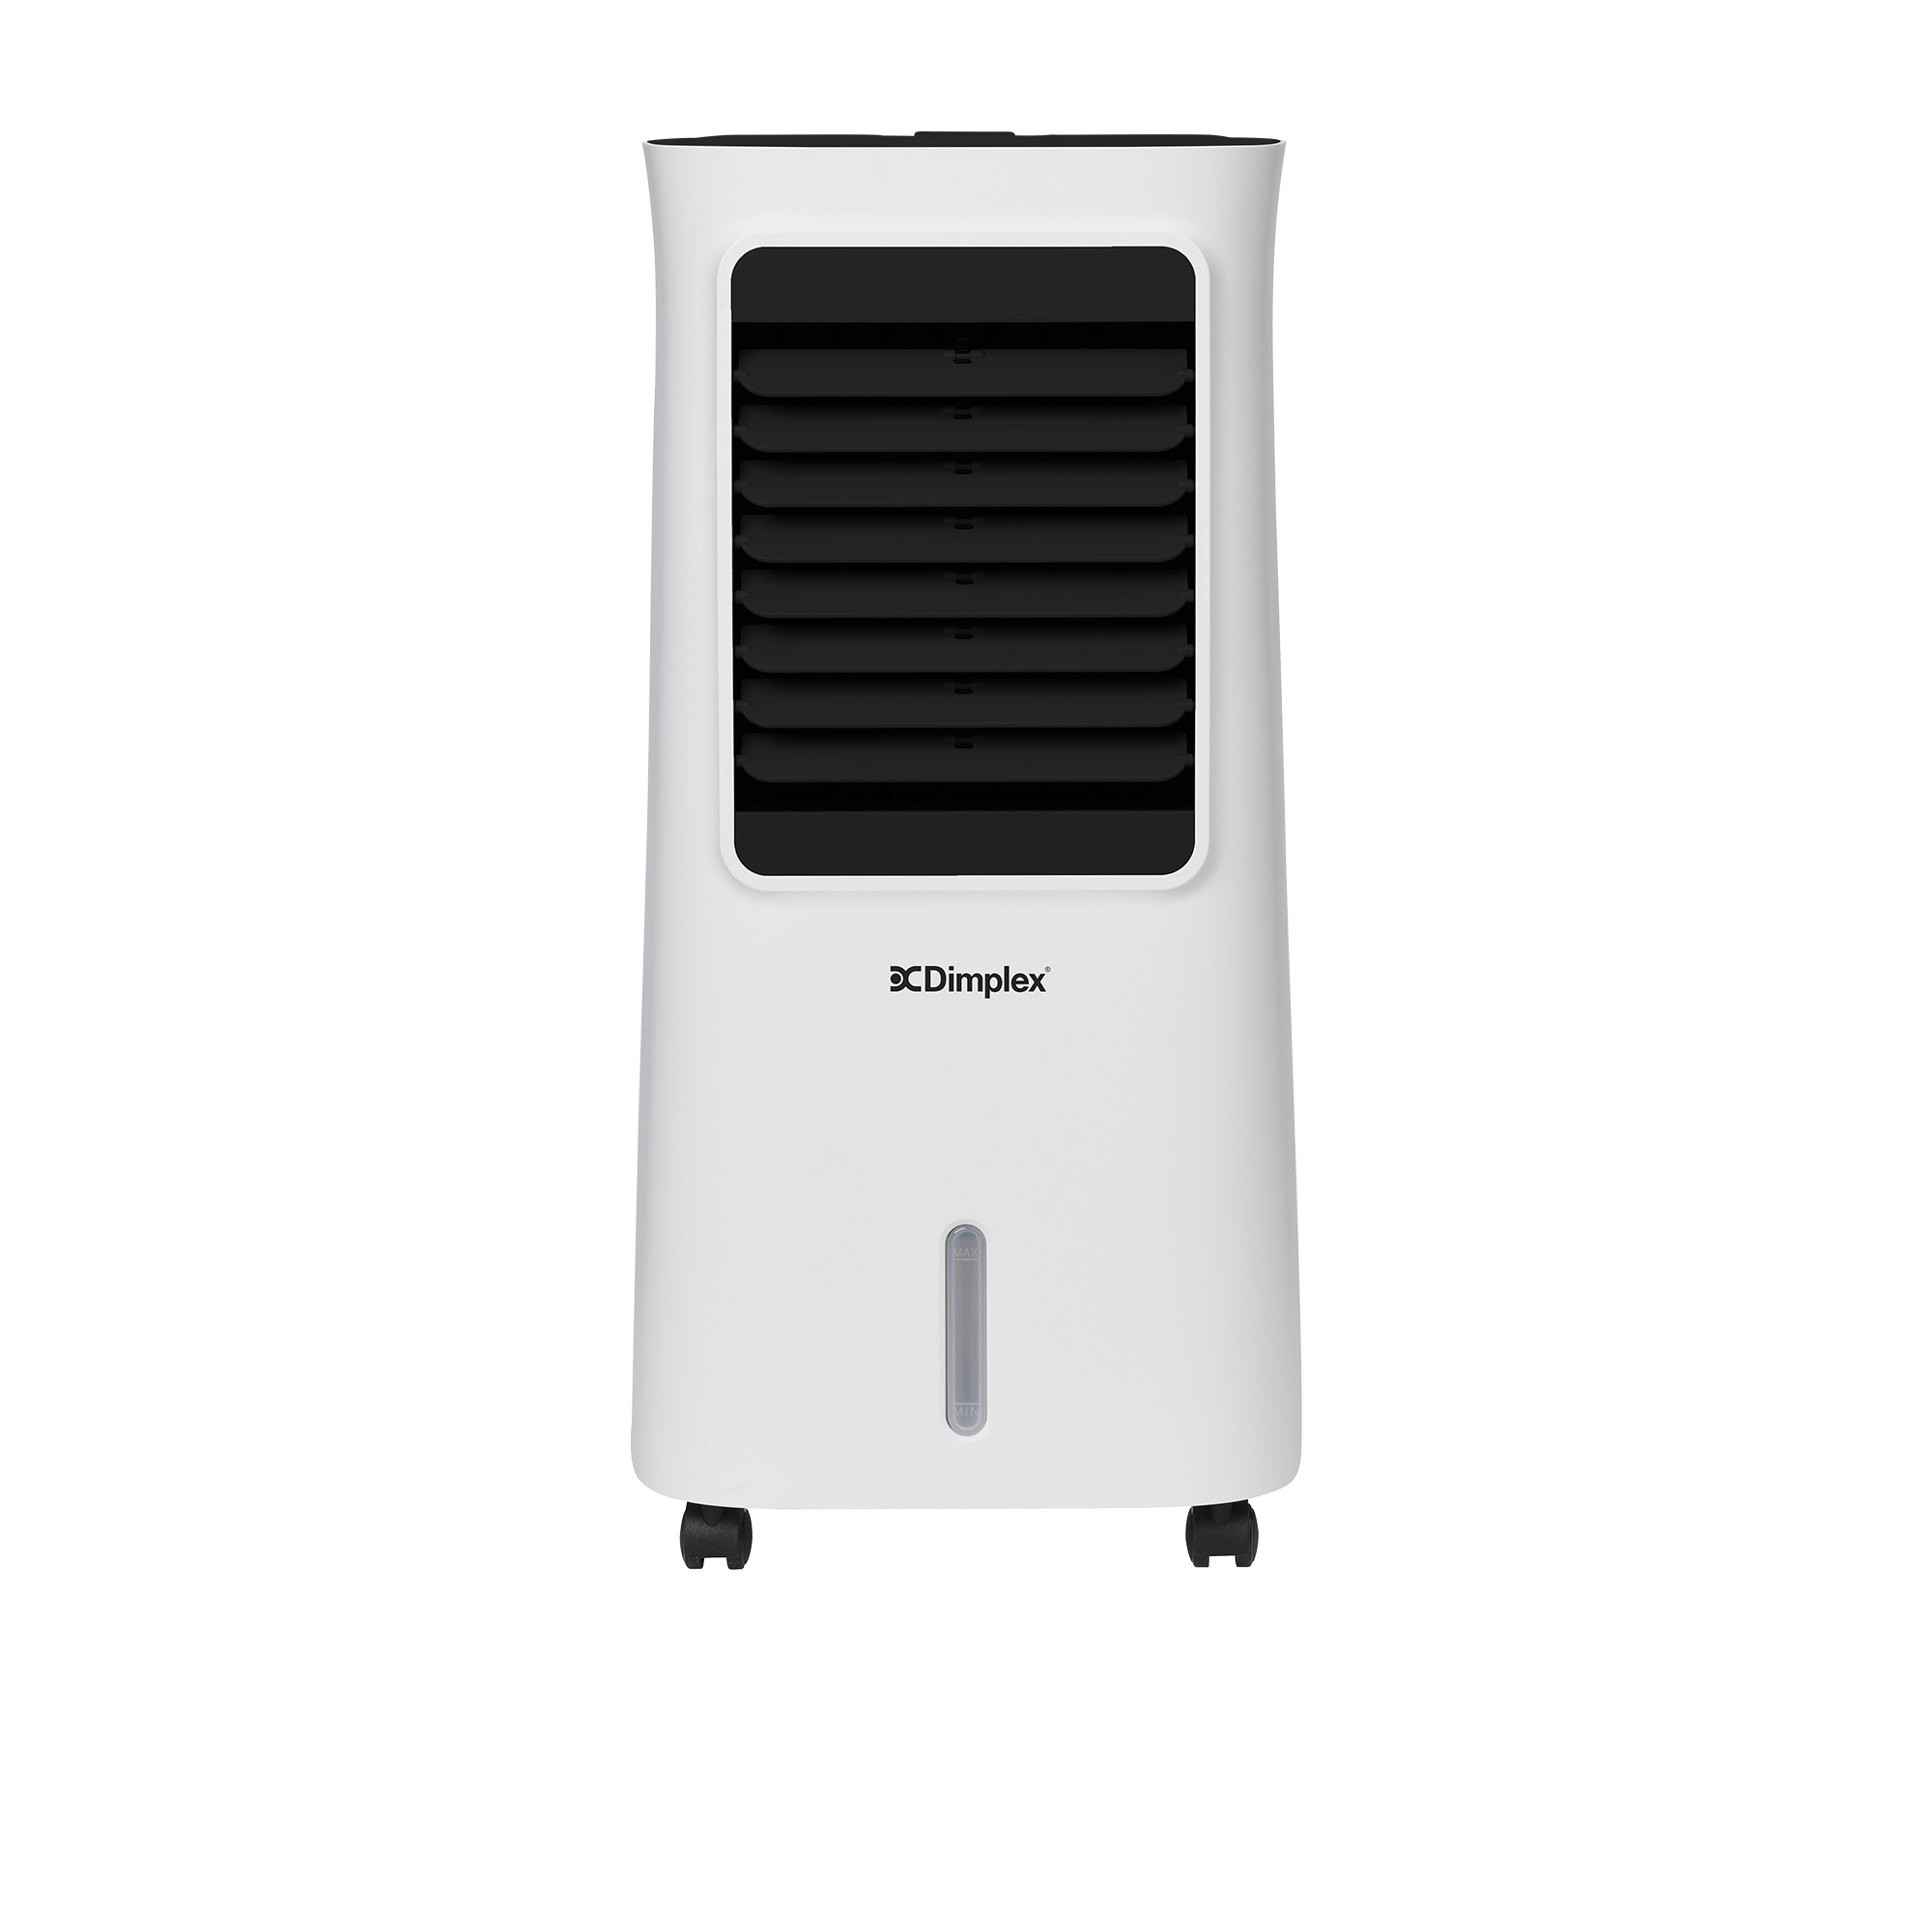 Dimplex Evaporative Cooler with Air Purifier Image 1